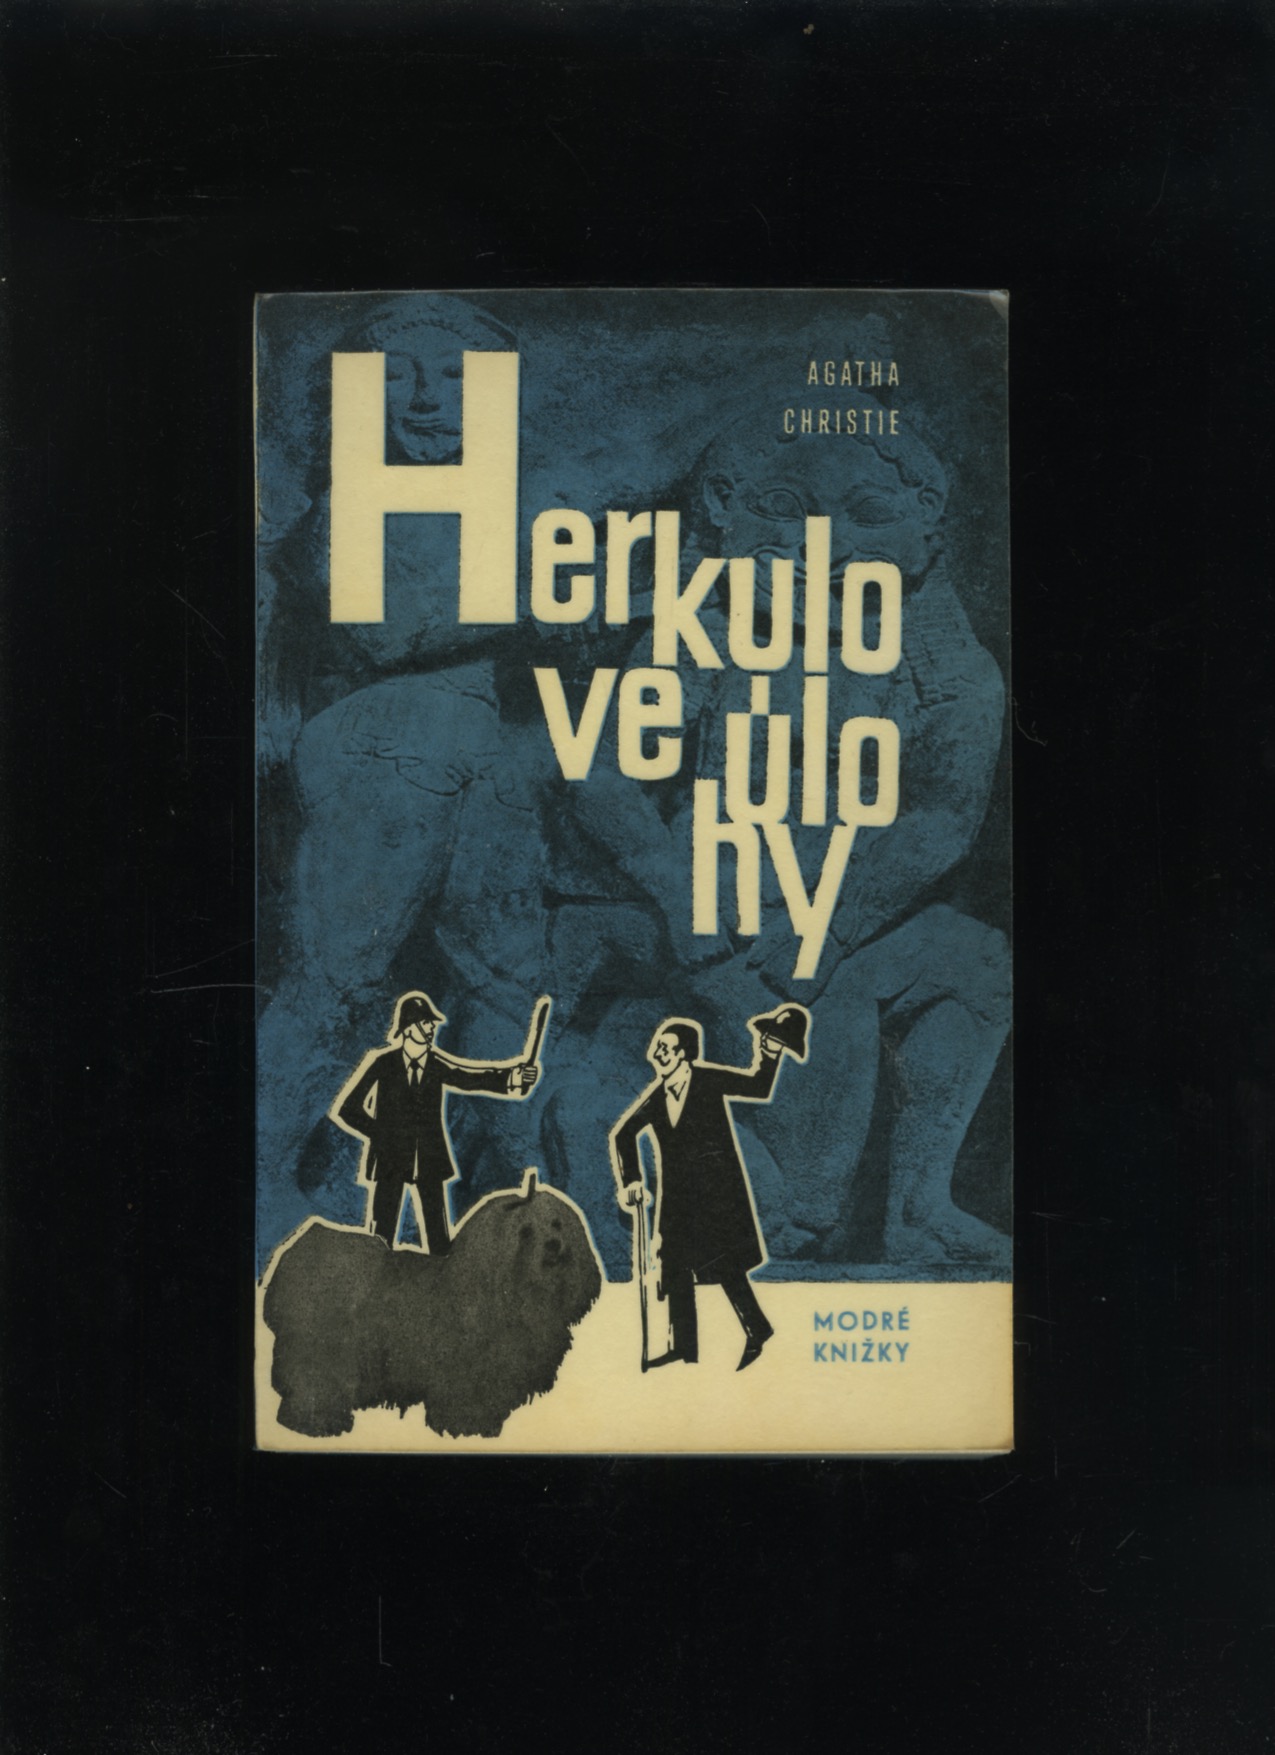 Herkulove úlohy (Agatha Christie)